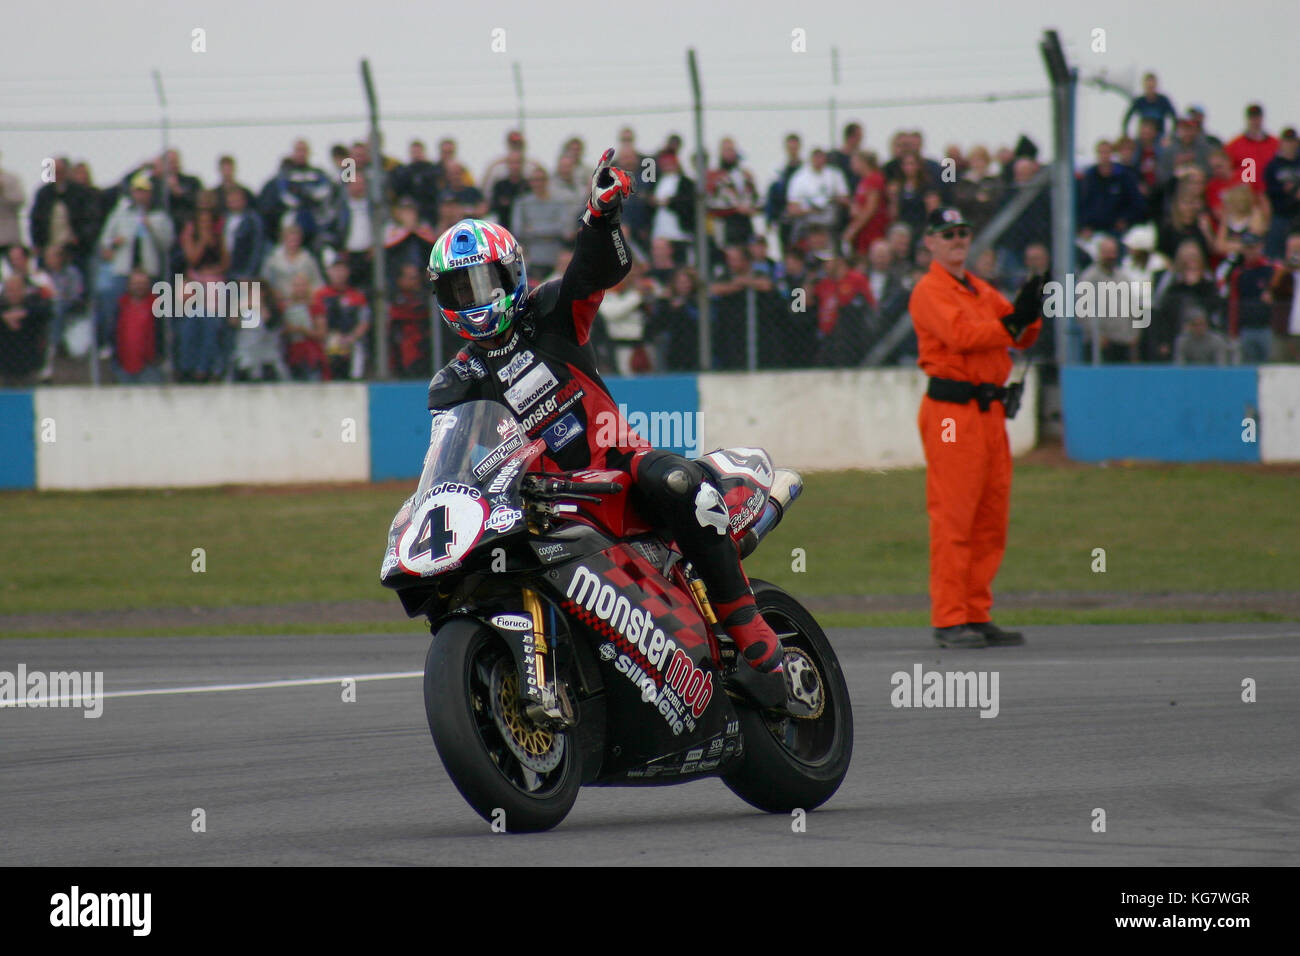 Motorcycle racer, Shane 'Shakey' Byrne, on track at Donington Park Stock Photo